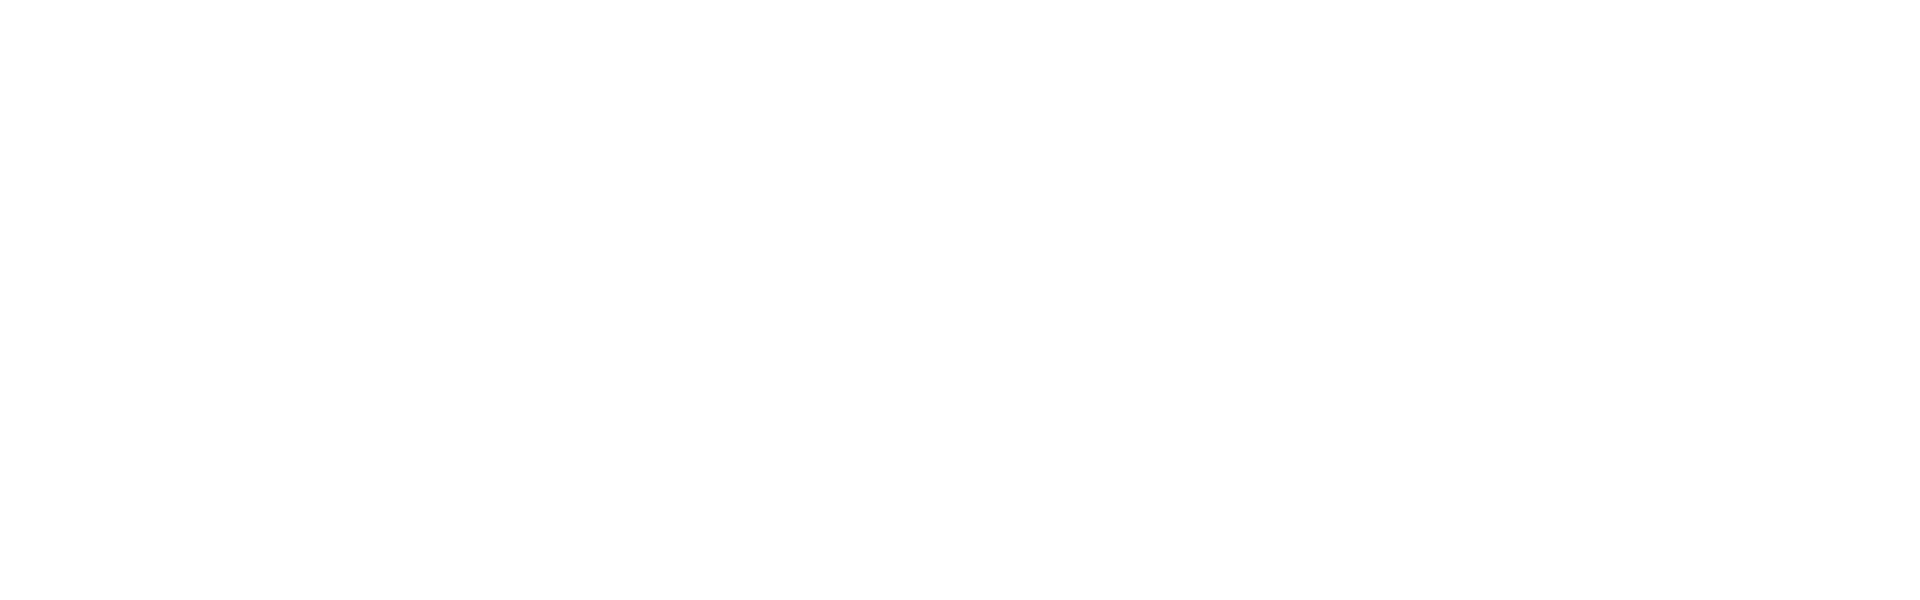 Podcast Karine Ruel